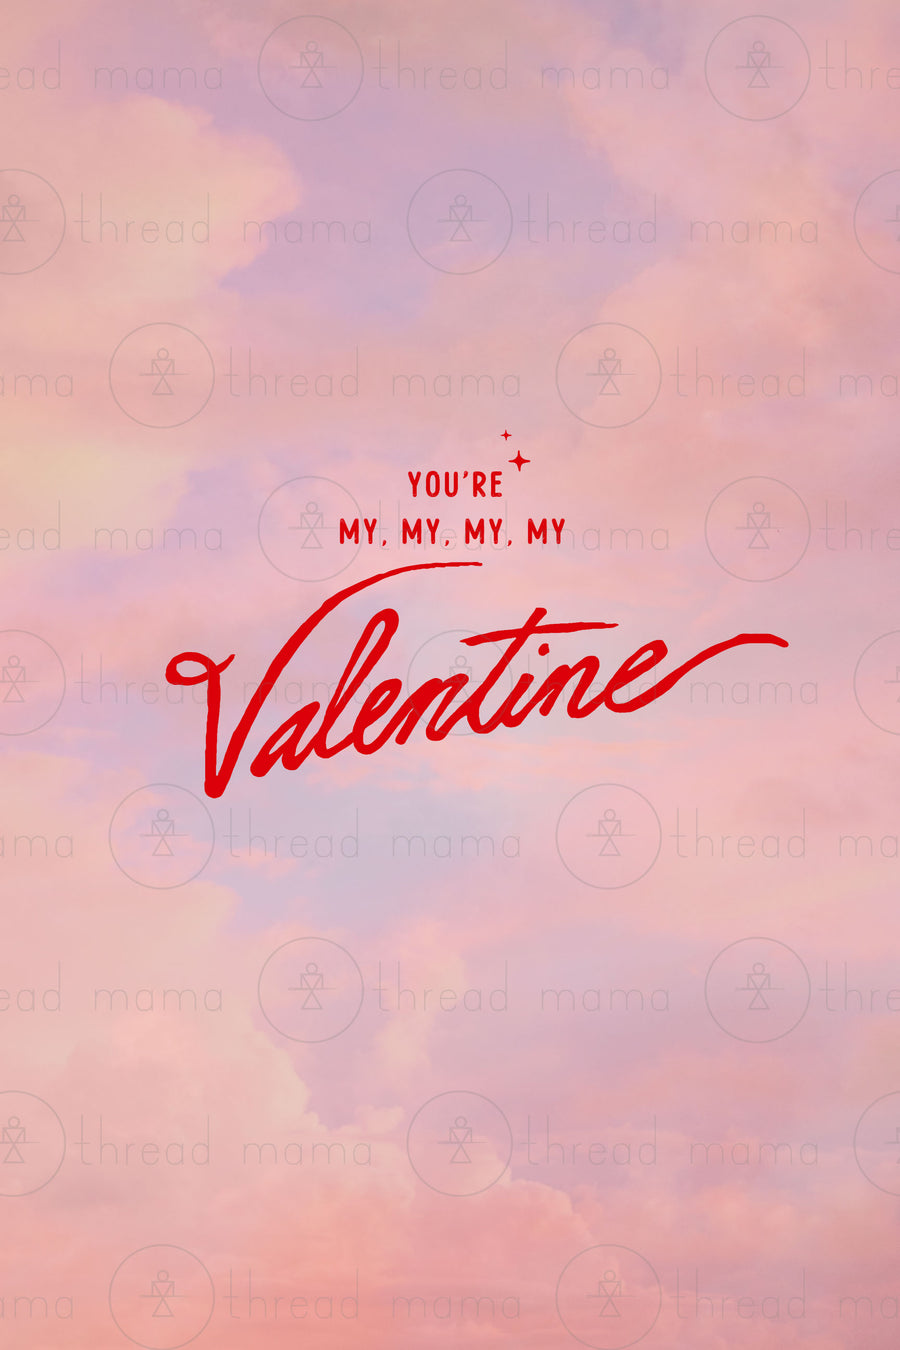 You're My Valentine - Set